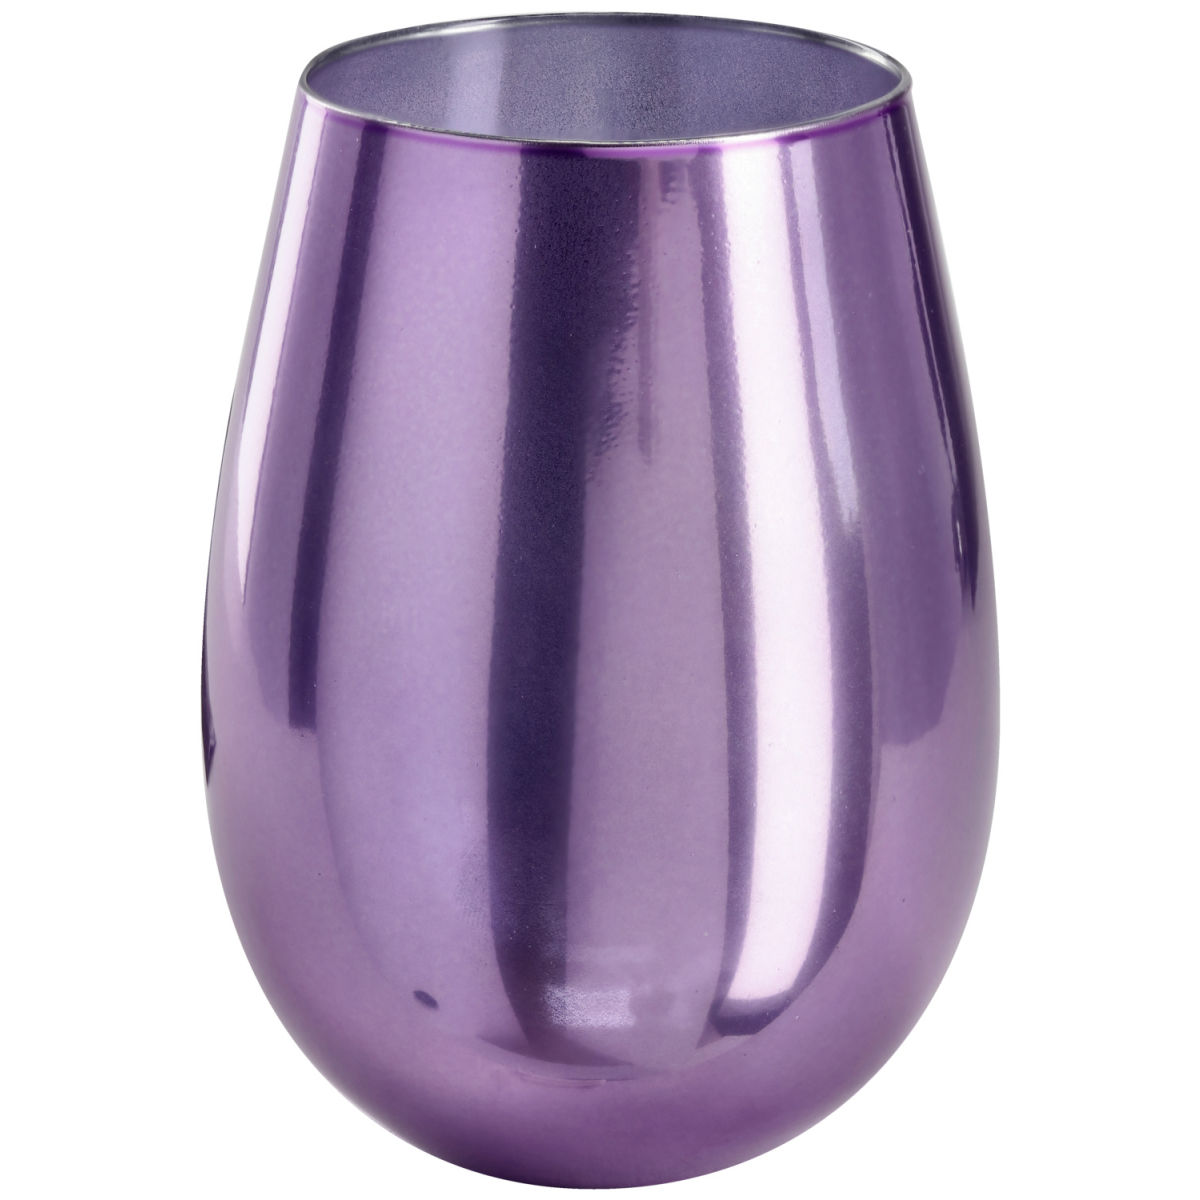 Vega Waterglas Aluna; 500ml, 8.2x12.3 cm (ØxH); lila; 6 stuk / verpakking